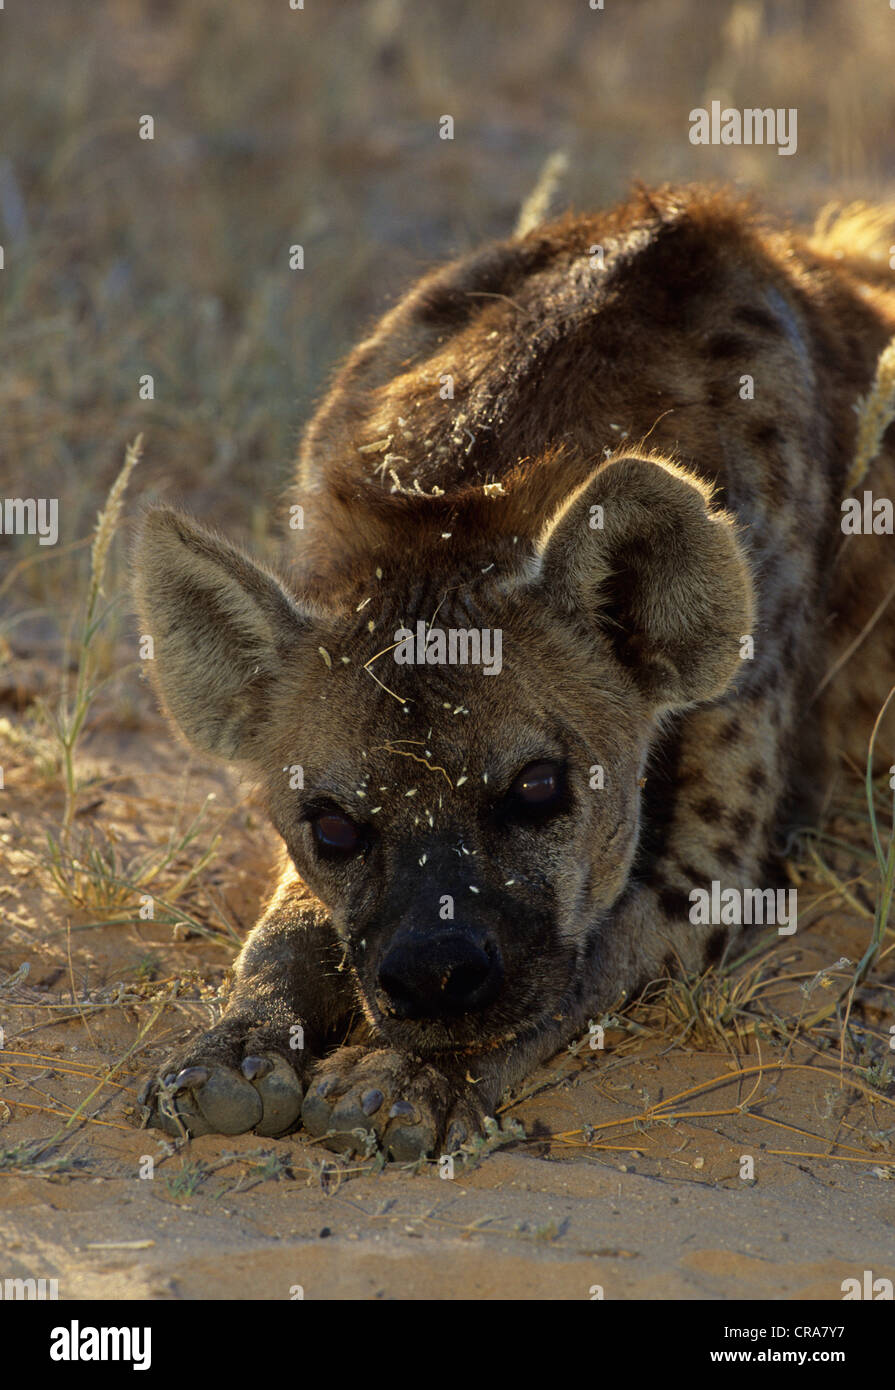 Hiena manchada (crocuta crocuta), el parque transfronterizo Kgalagadi, Africa del Sur, Africa kalahari Foto de stock